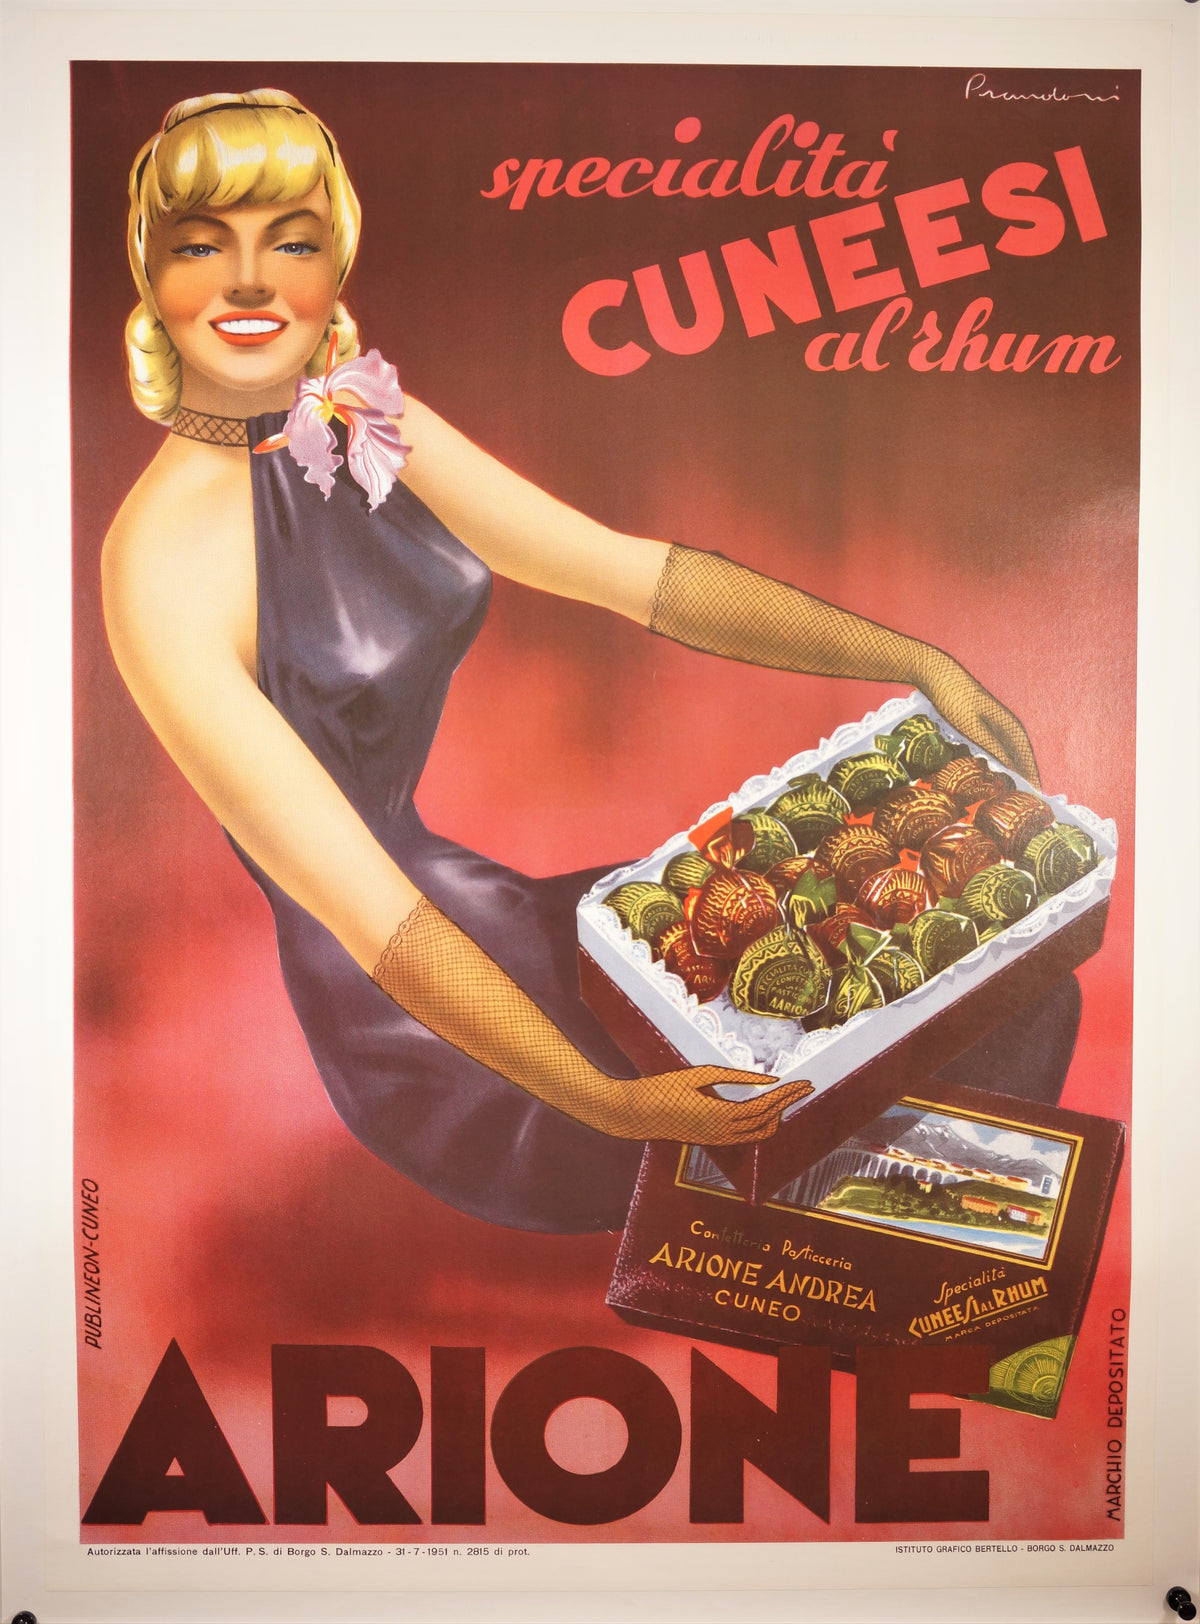 Cuneesi Rhum - Authentic Vintage Poster